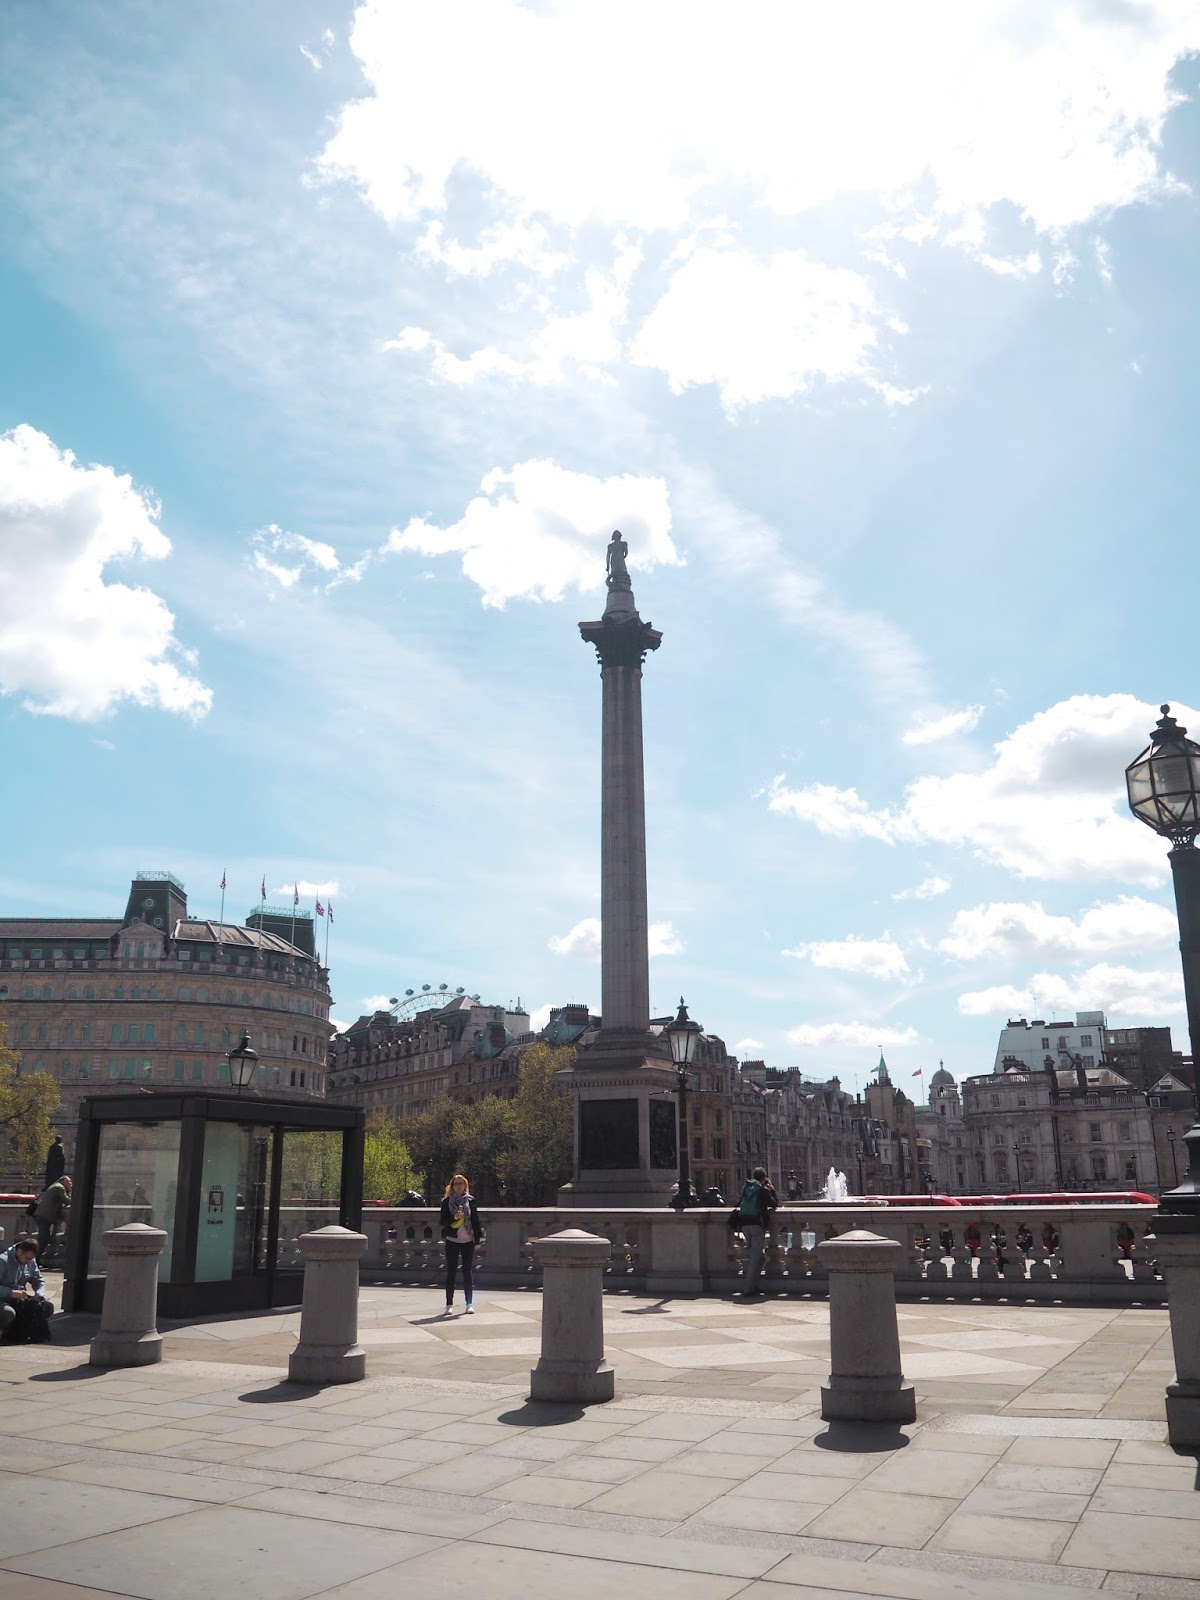 Postcards from London - Trafalgar Square